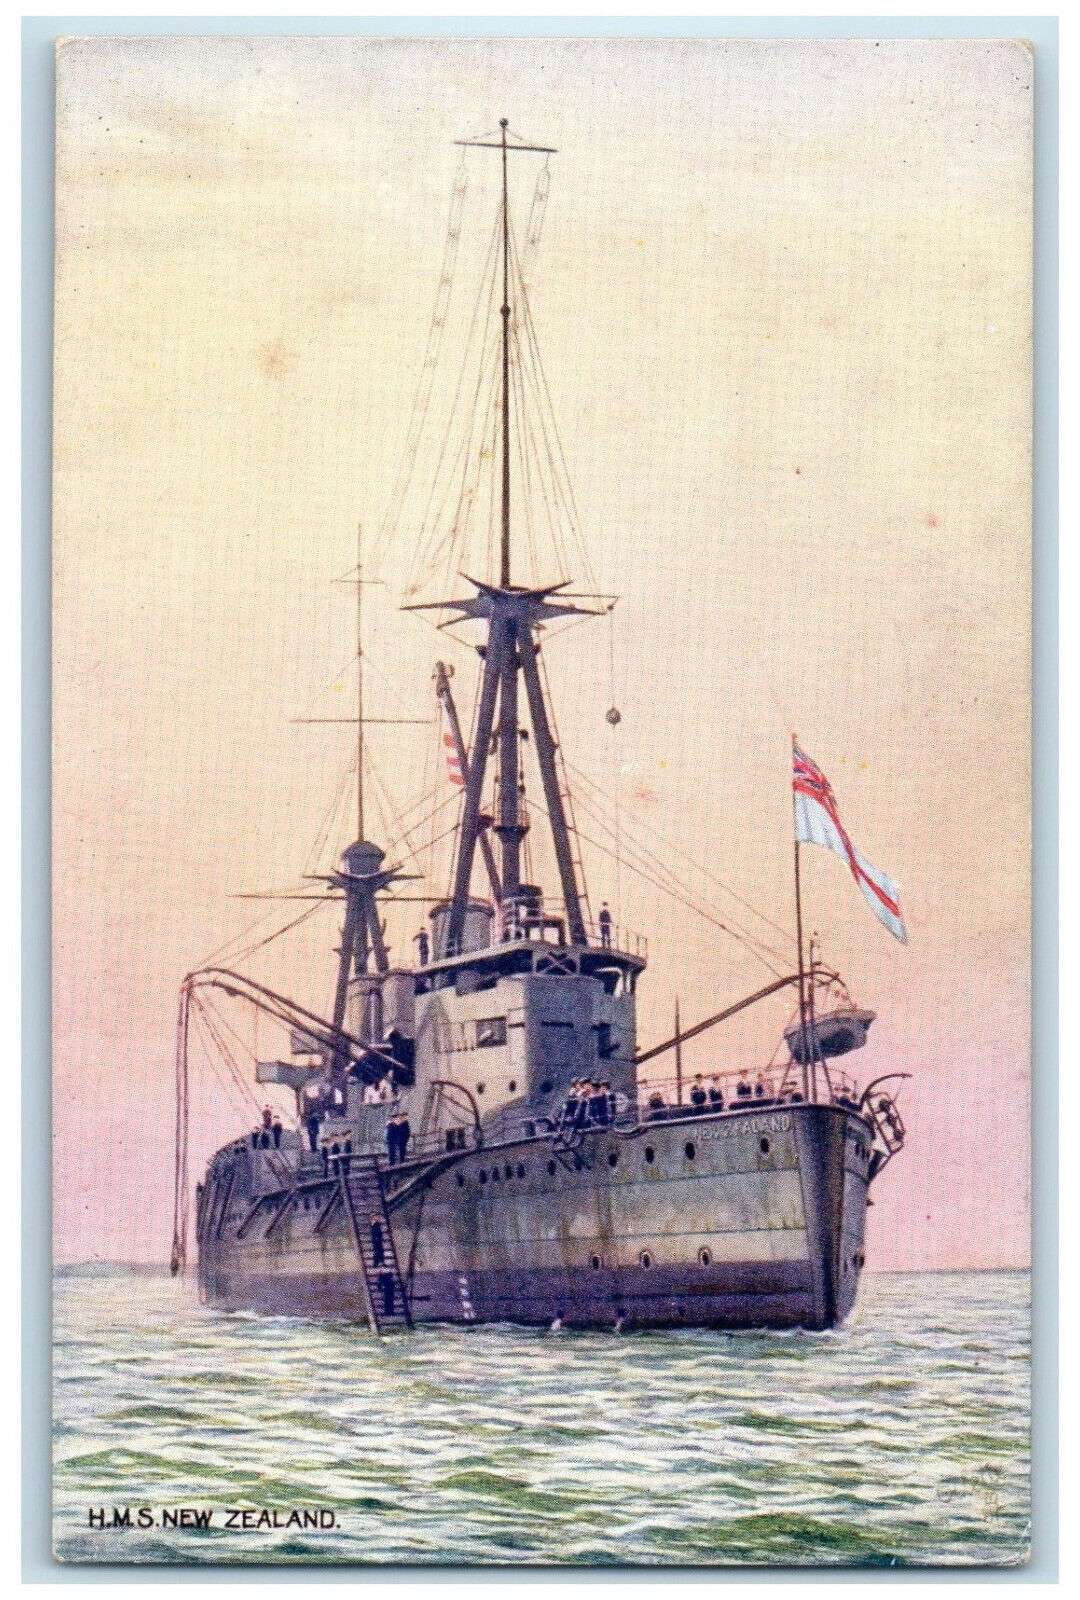 c1910 Front View of H.M.S New Zealand Battle Cruiser Oilette Tuck Art Postcard